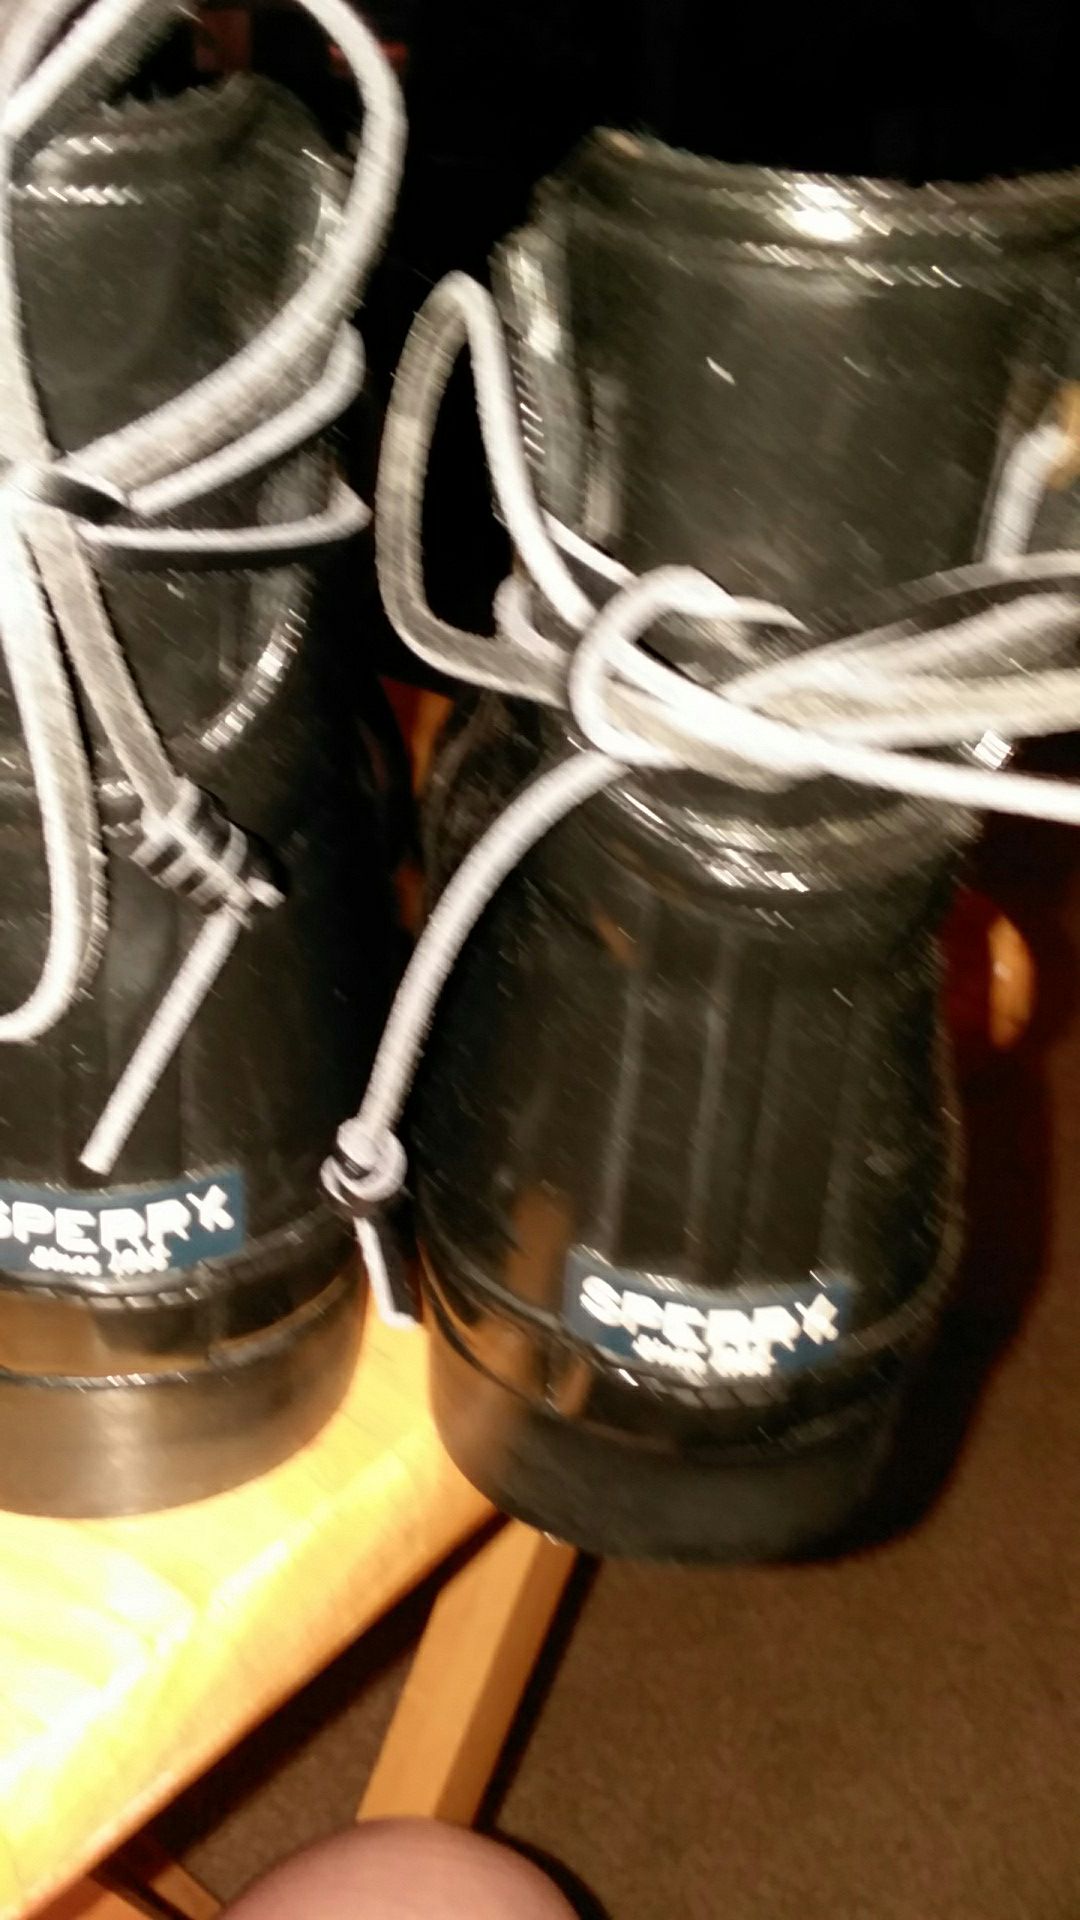 Sperry rain boots